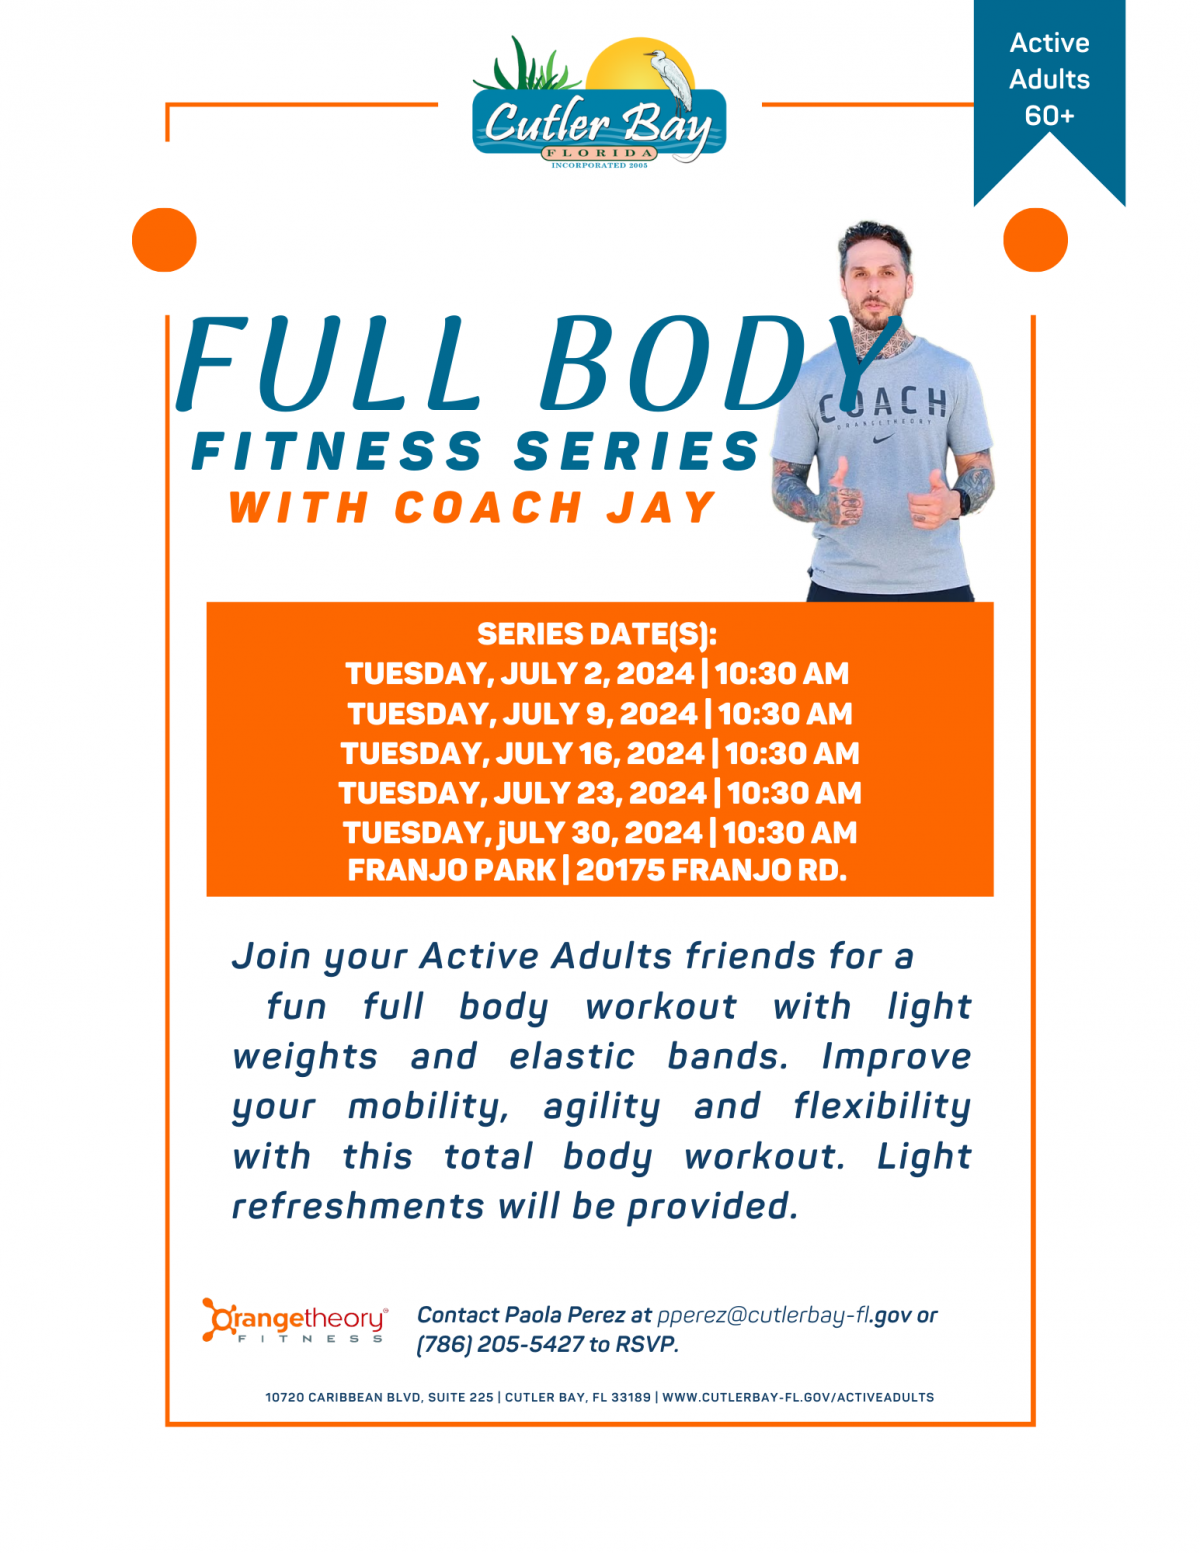 Active Adults Full Body fitness program. 